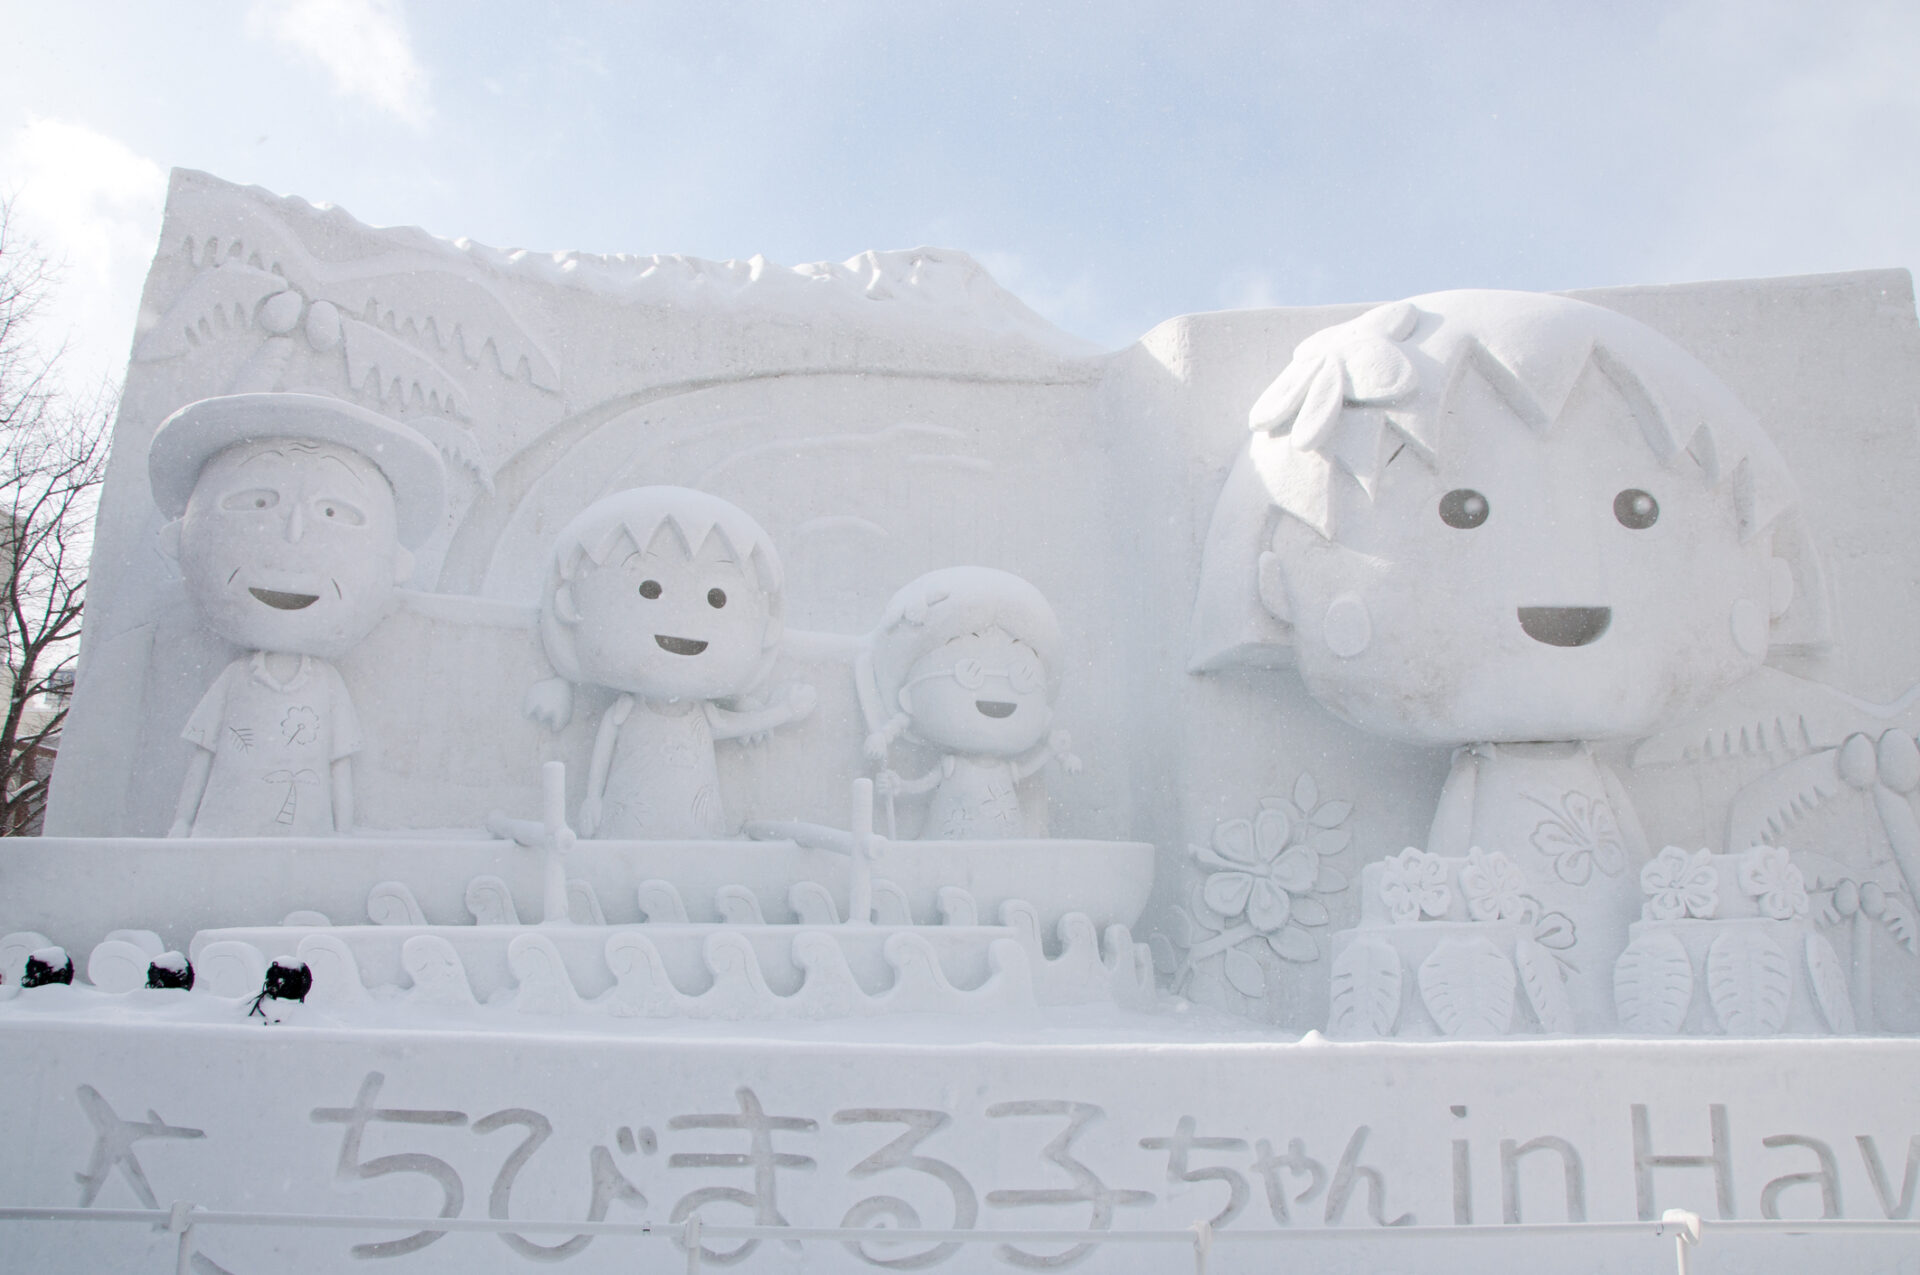 Snow sculpture in Sapporo Snow Festival at Odori Park. (Photo: iStockphoto)